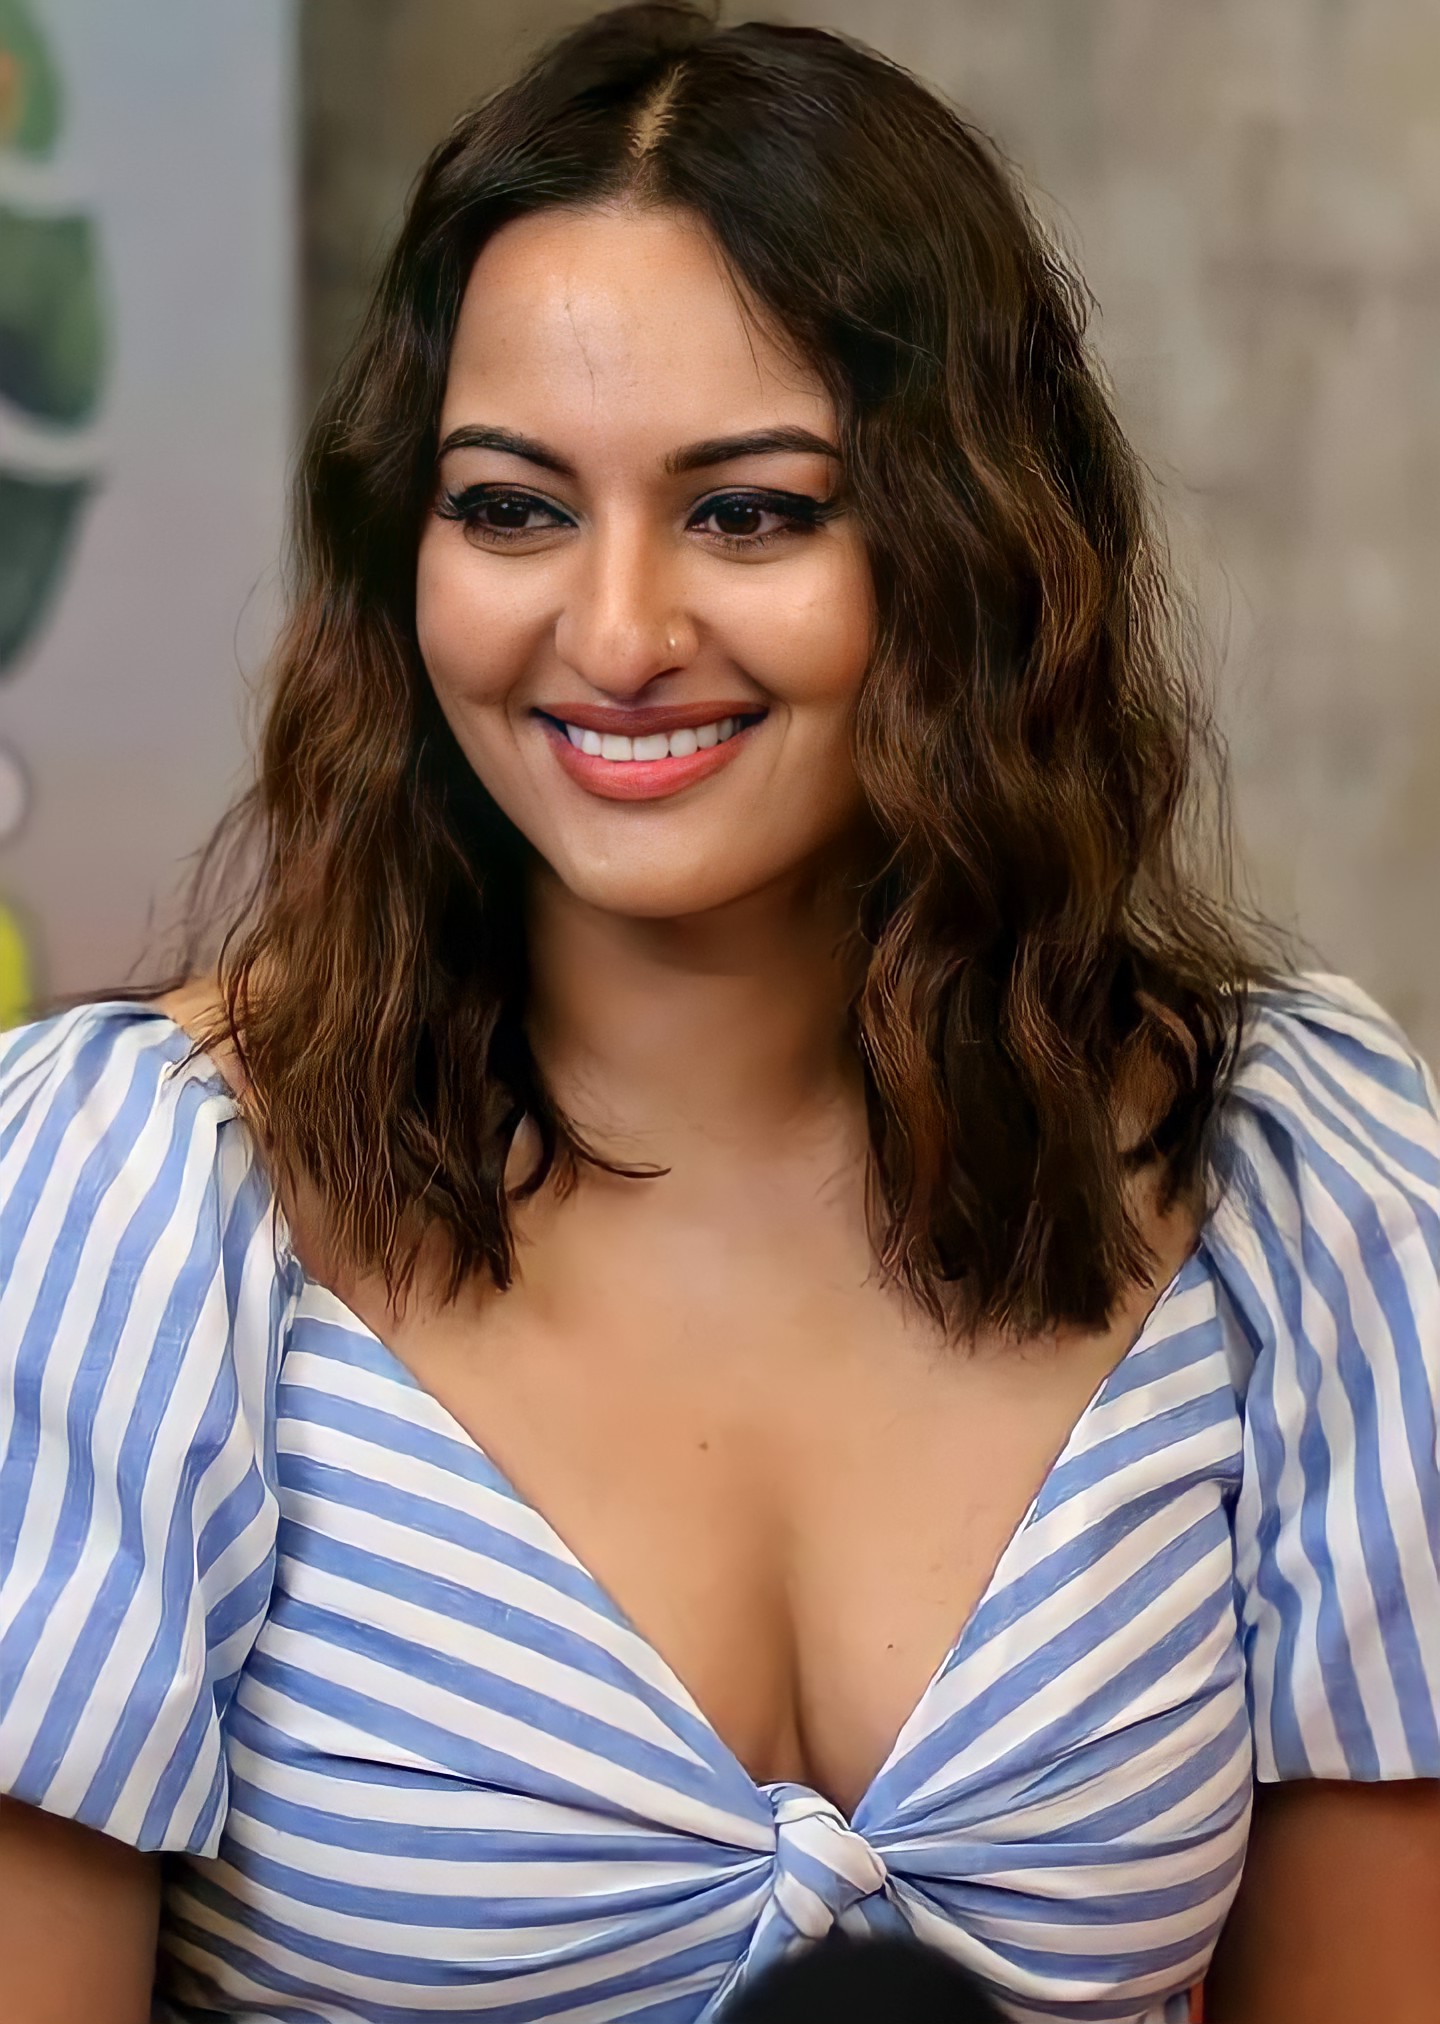 Sonakshi Sinha Xnxx Video - Actress Hot Photos 1ï¸âƒ£0ï¸âƒ£9ï¸âƒ£ ðŸ‡° on Twitter: \